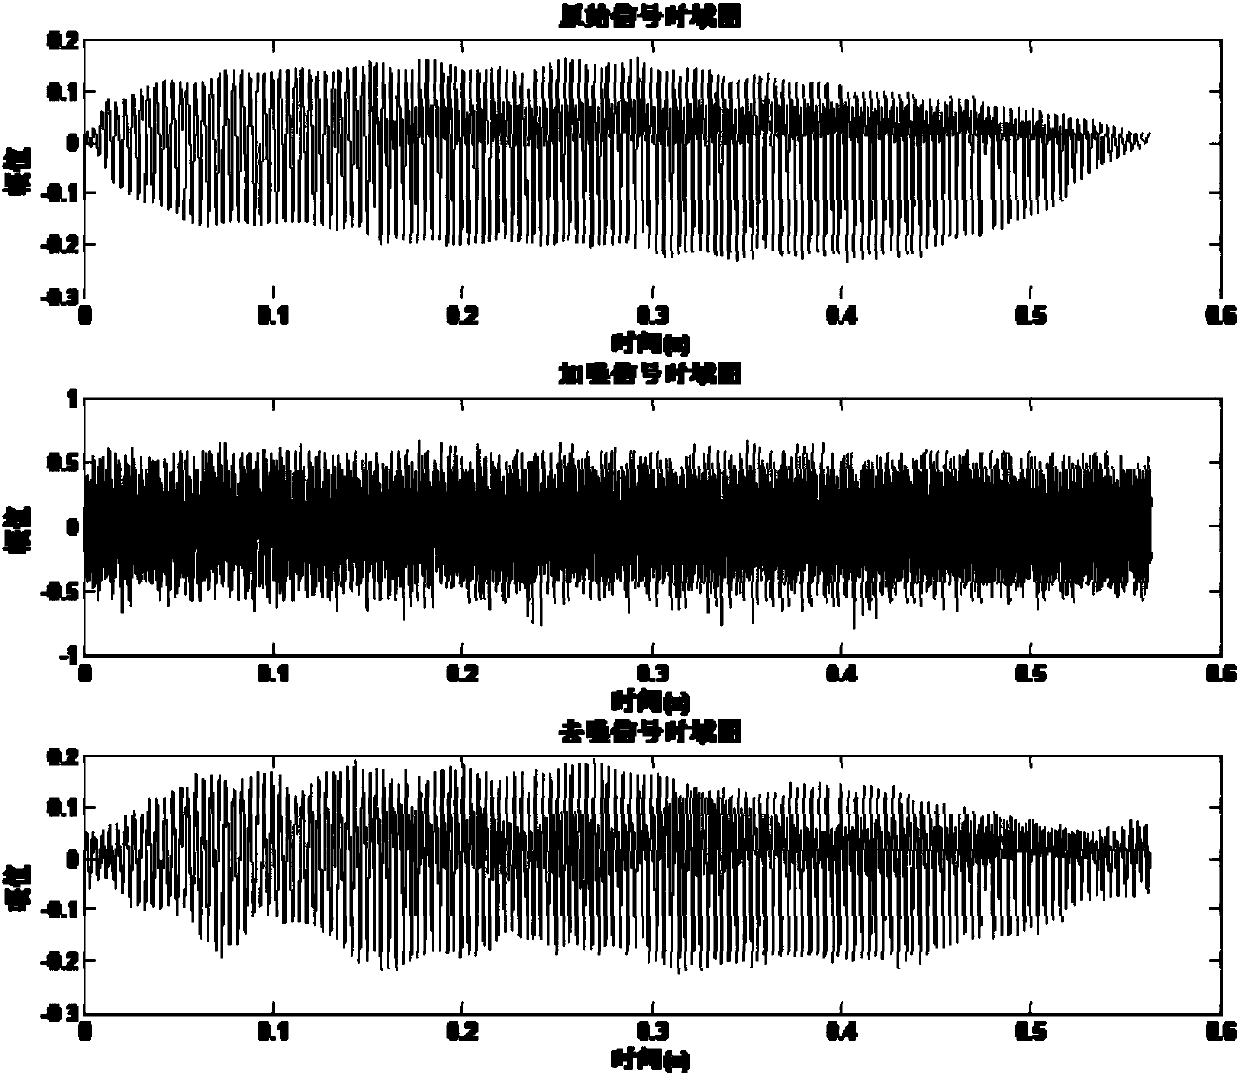 Voice noise reduction method and device based on signal autocorrelation